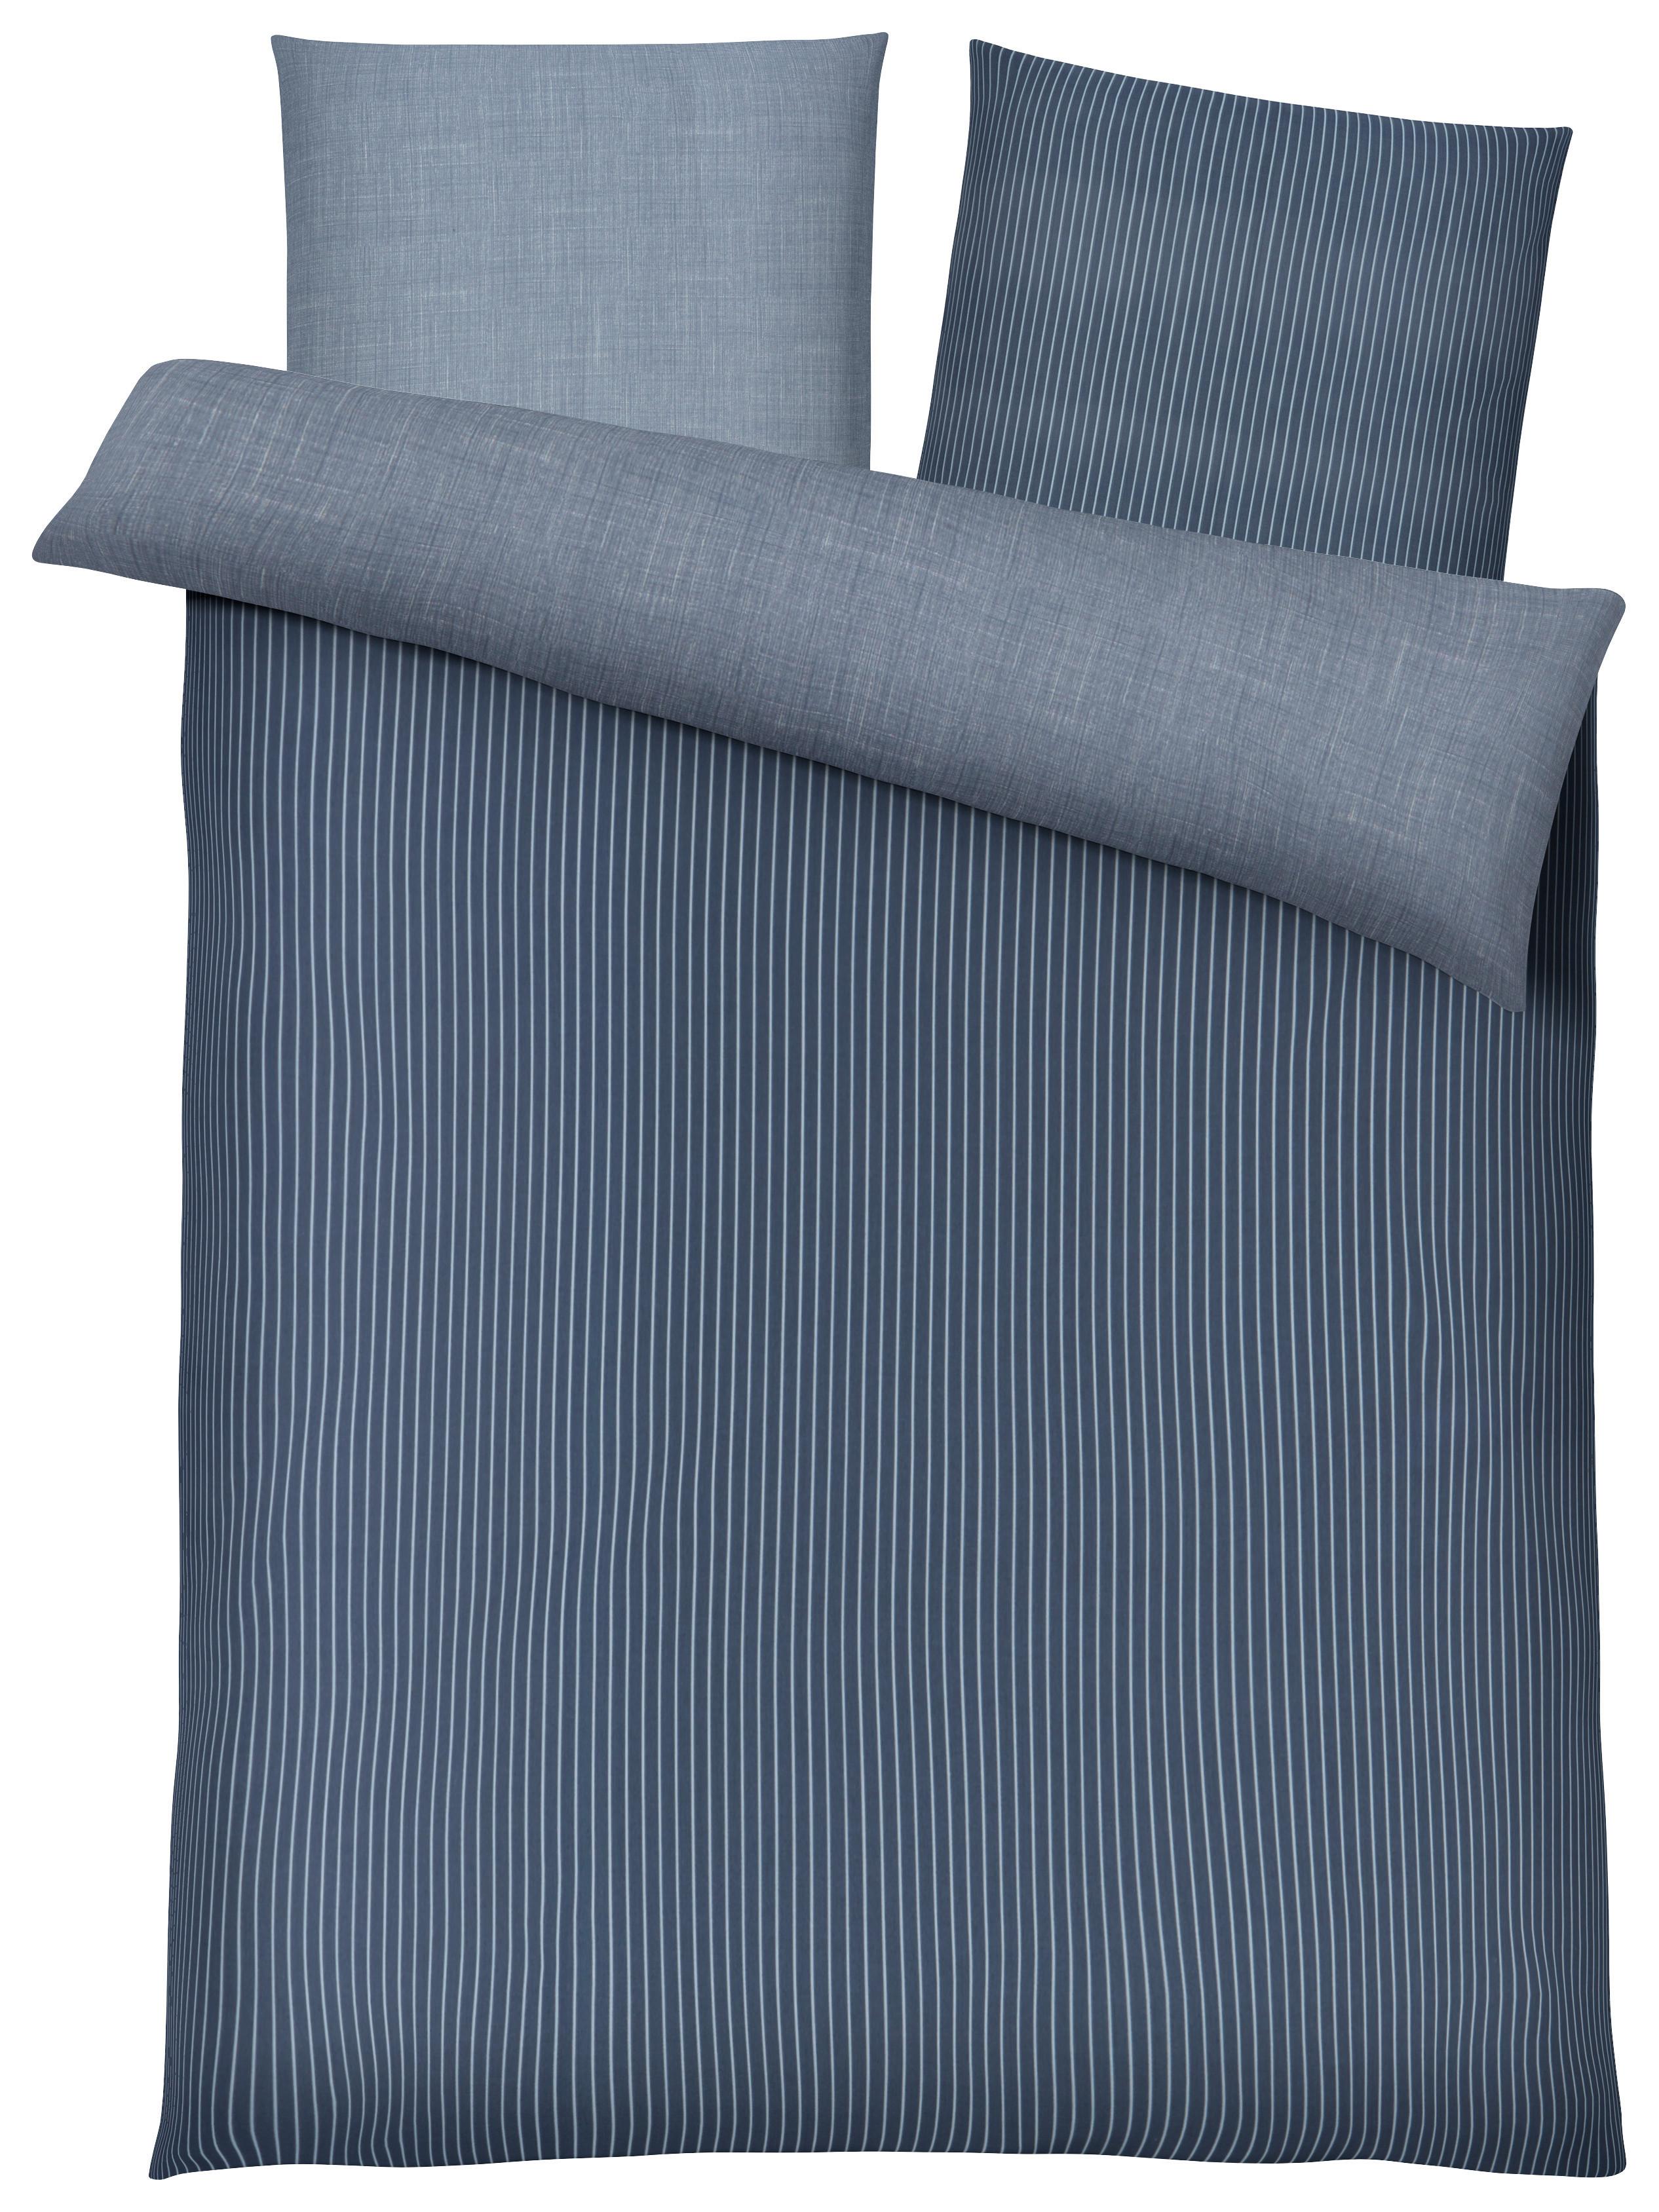 Bettwäsche Ibena in Grau ca. 135x200cm - Anthrazit/Grau, MODERN, Textil (135/200cm) - Ibena